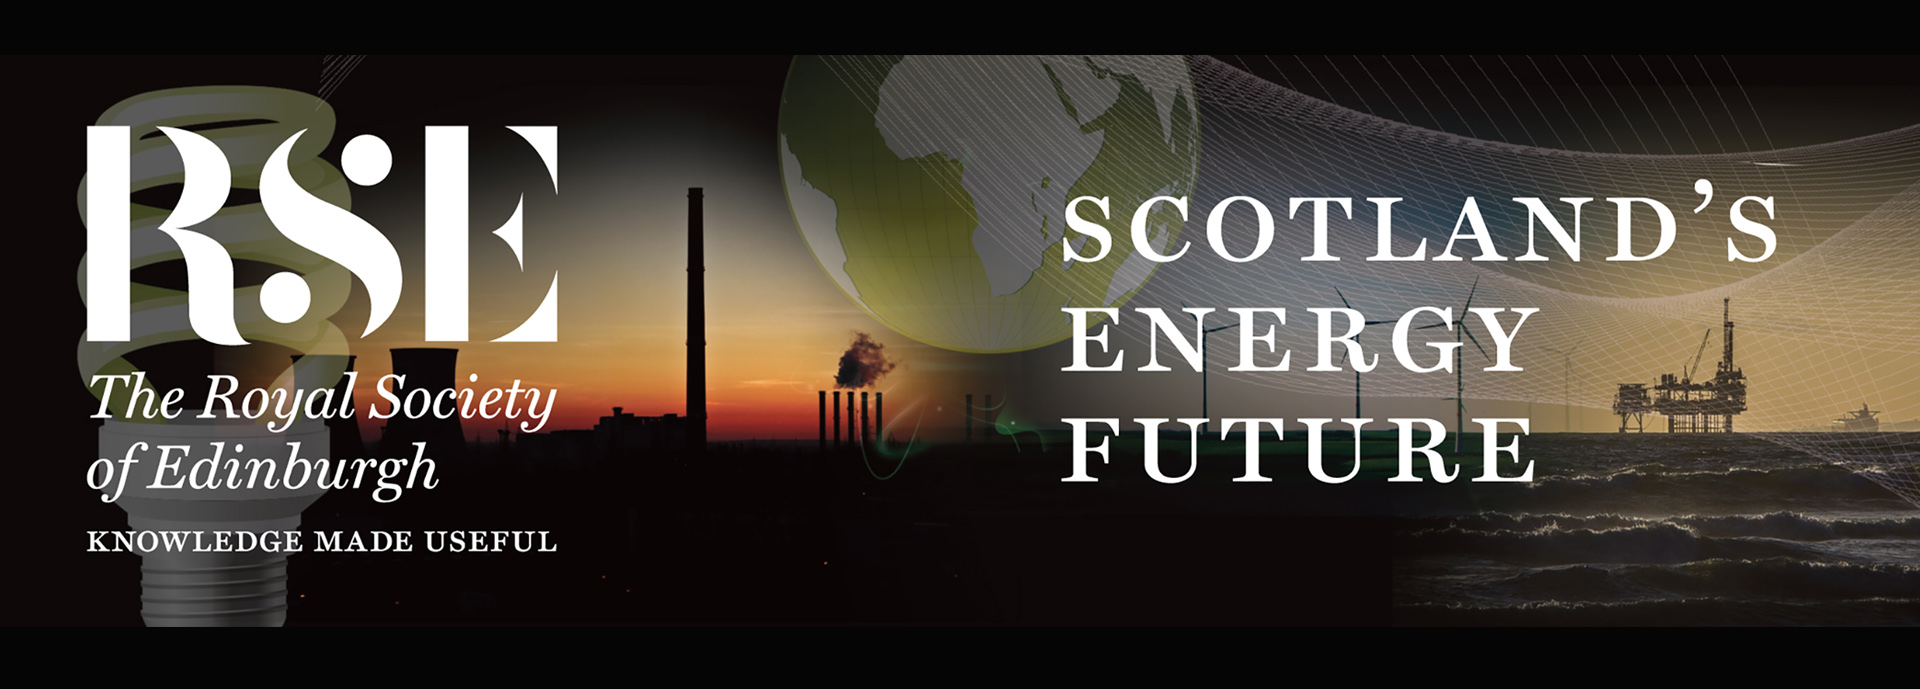 scotlands-energy-future-1920x689